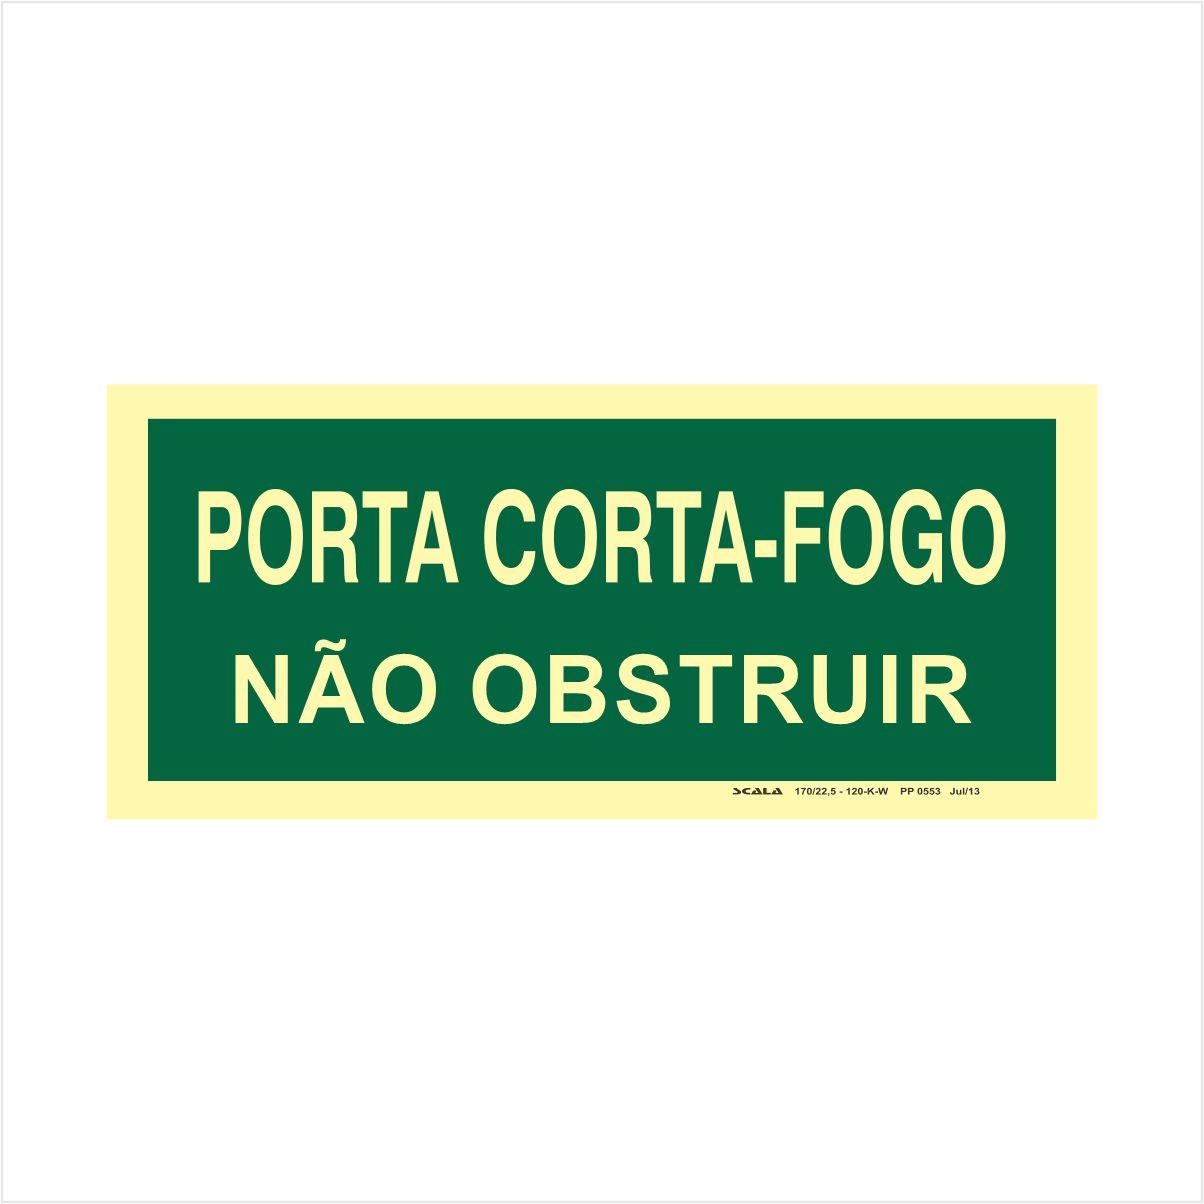 PLACA PORTA CORTA-FOGO NAO OBSTRUIR 12 X 24CM PVC 2MM PP0553